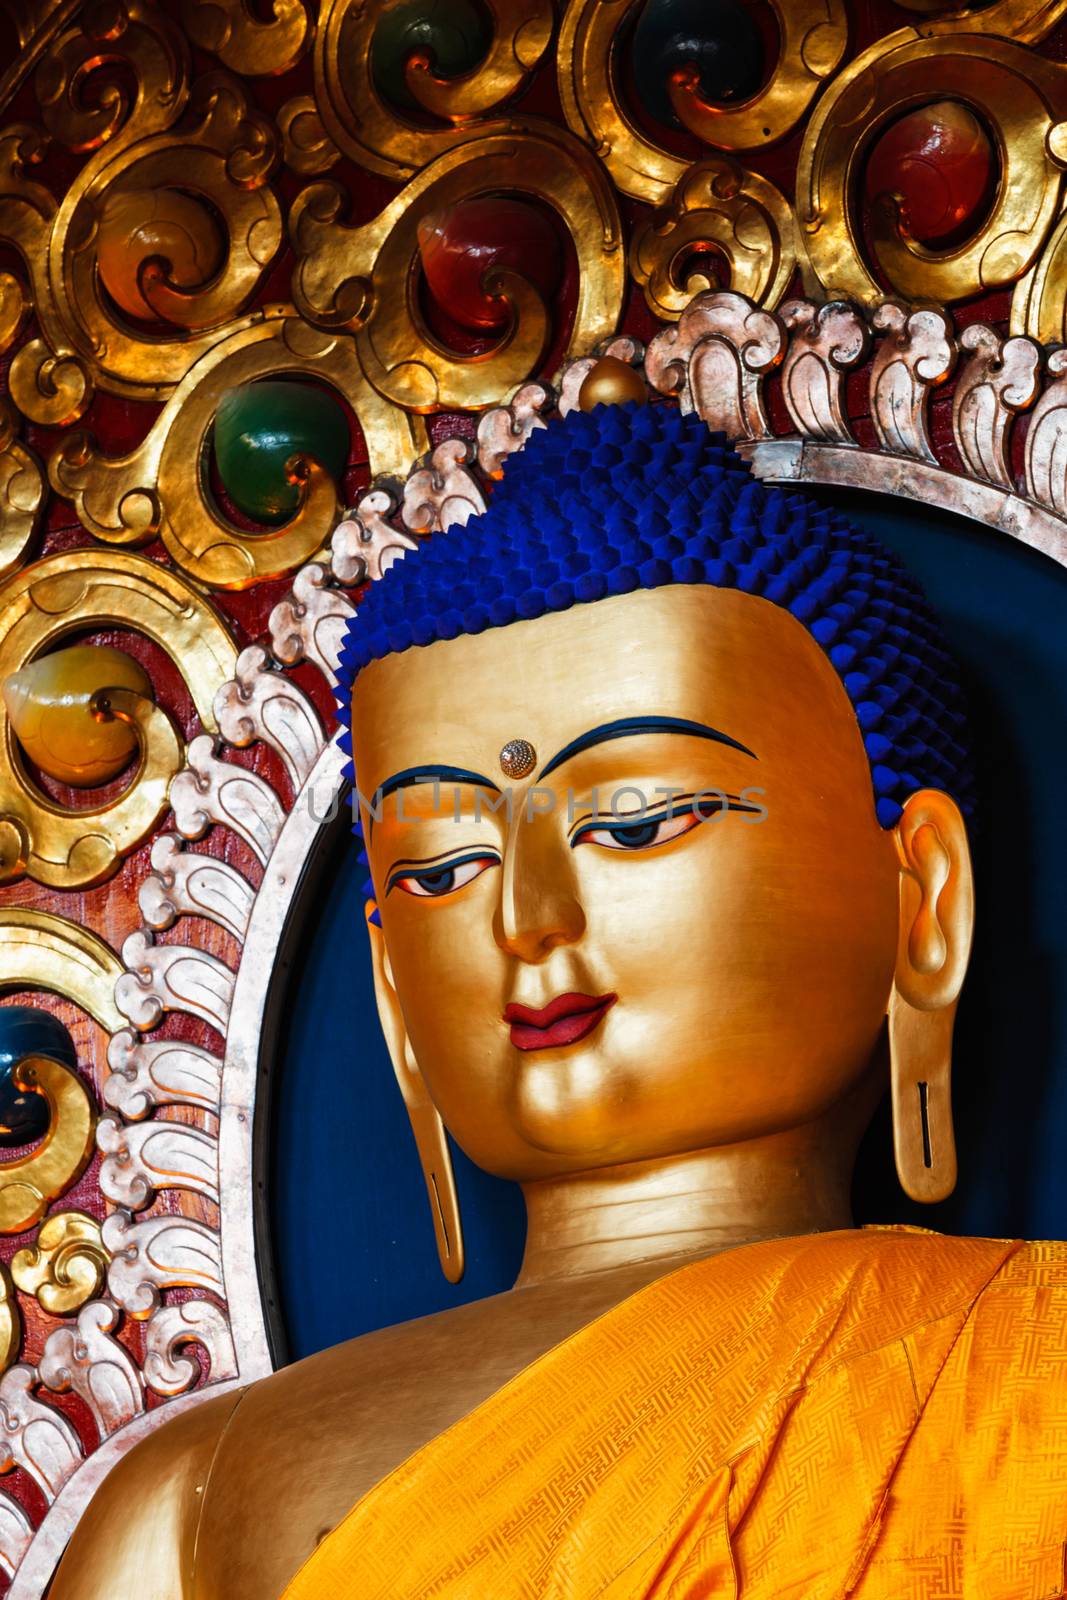 Sakyamuni Buddha statue in Buddhist temple by dimol